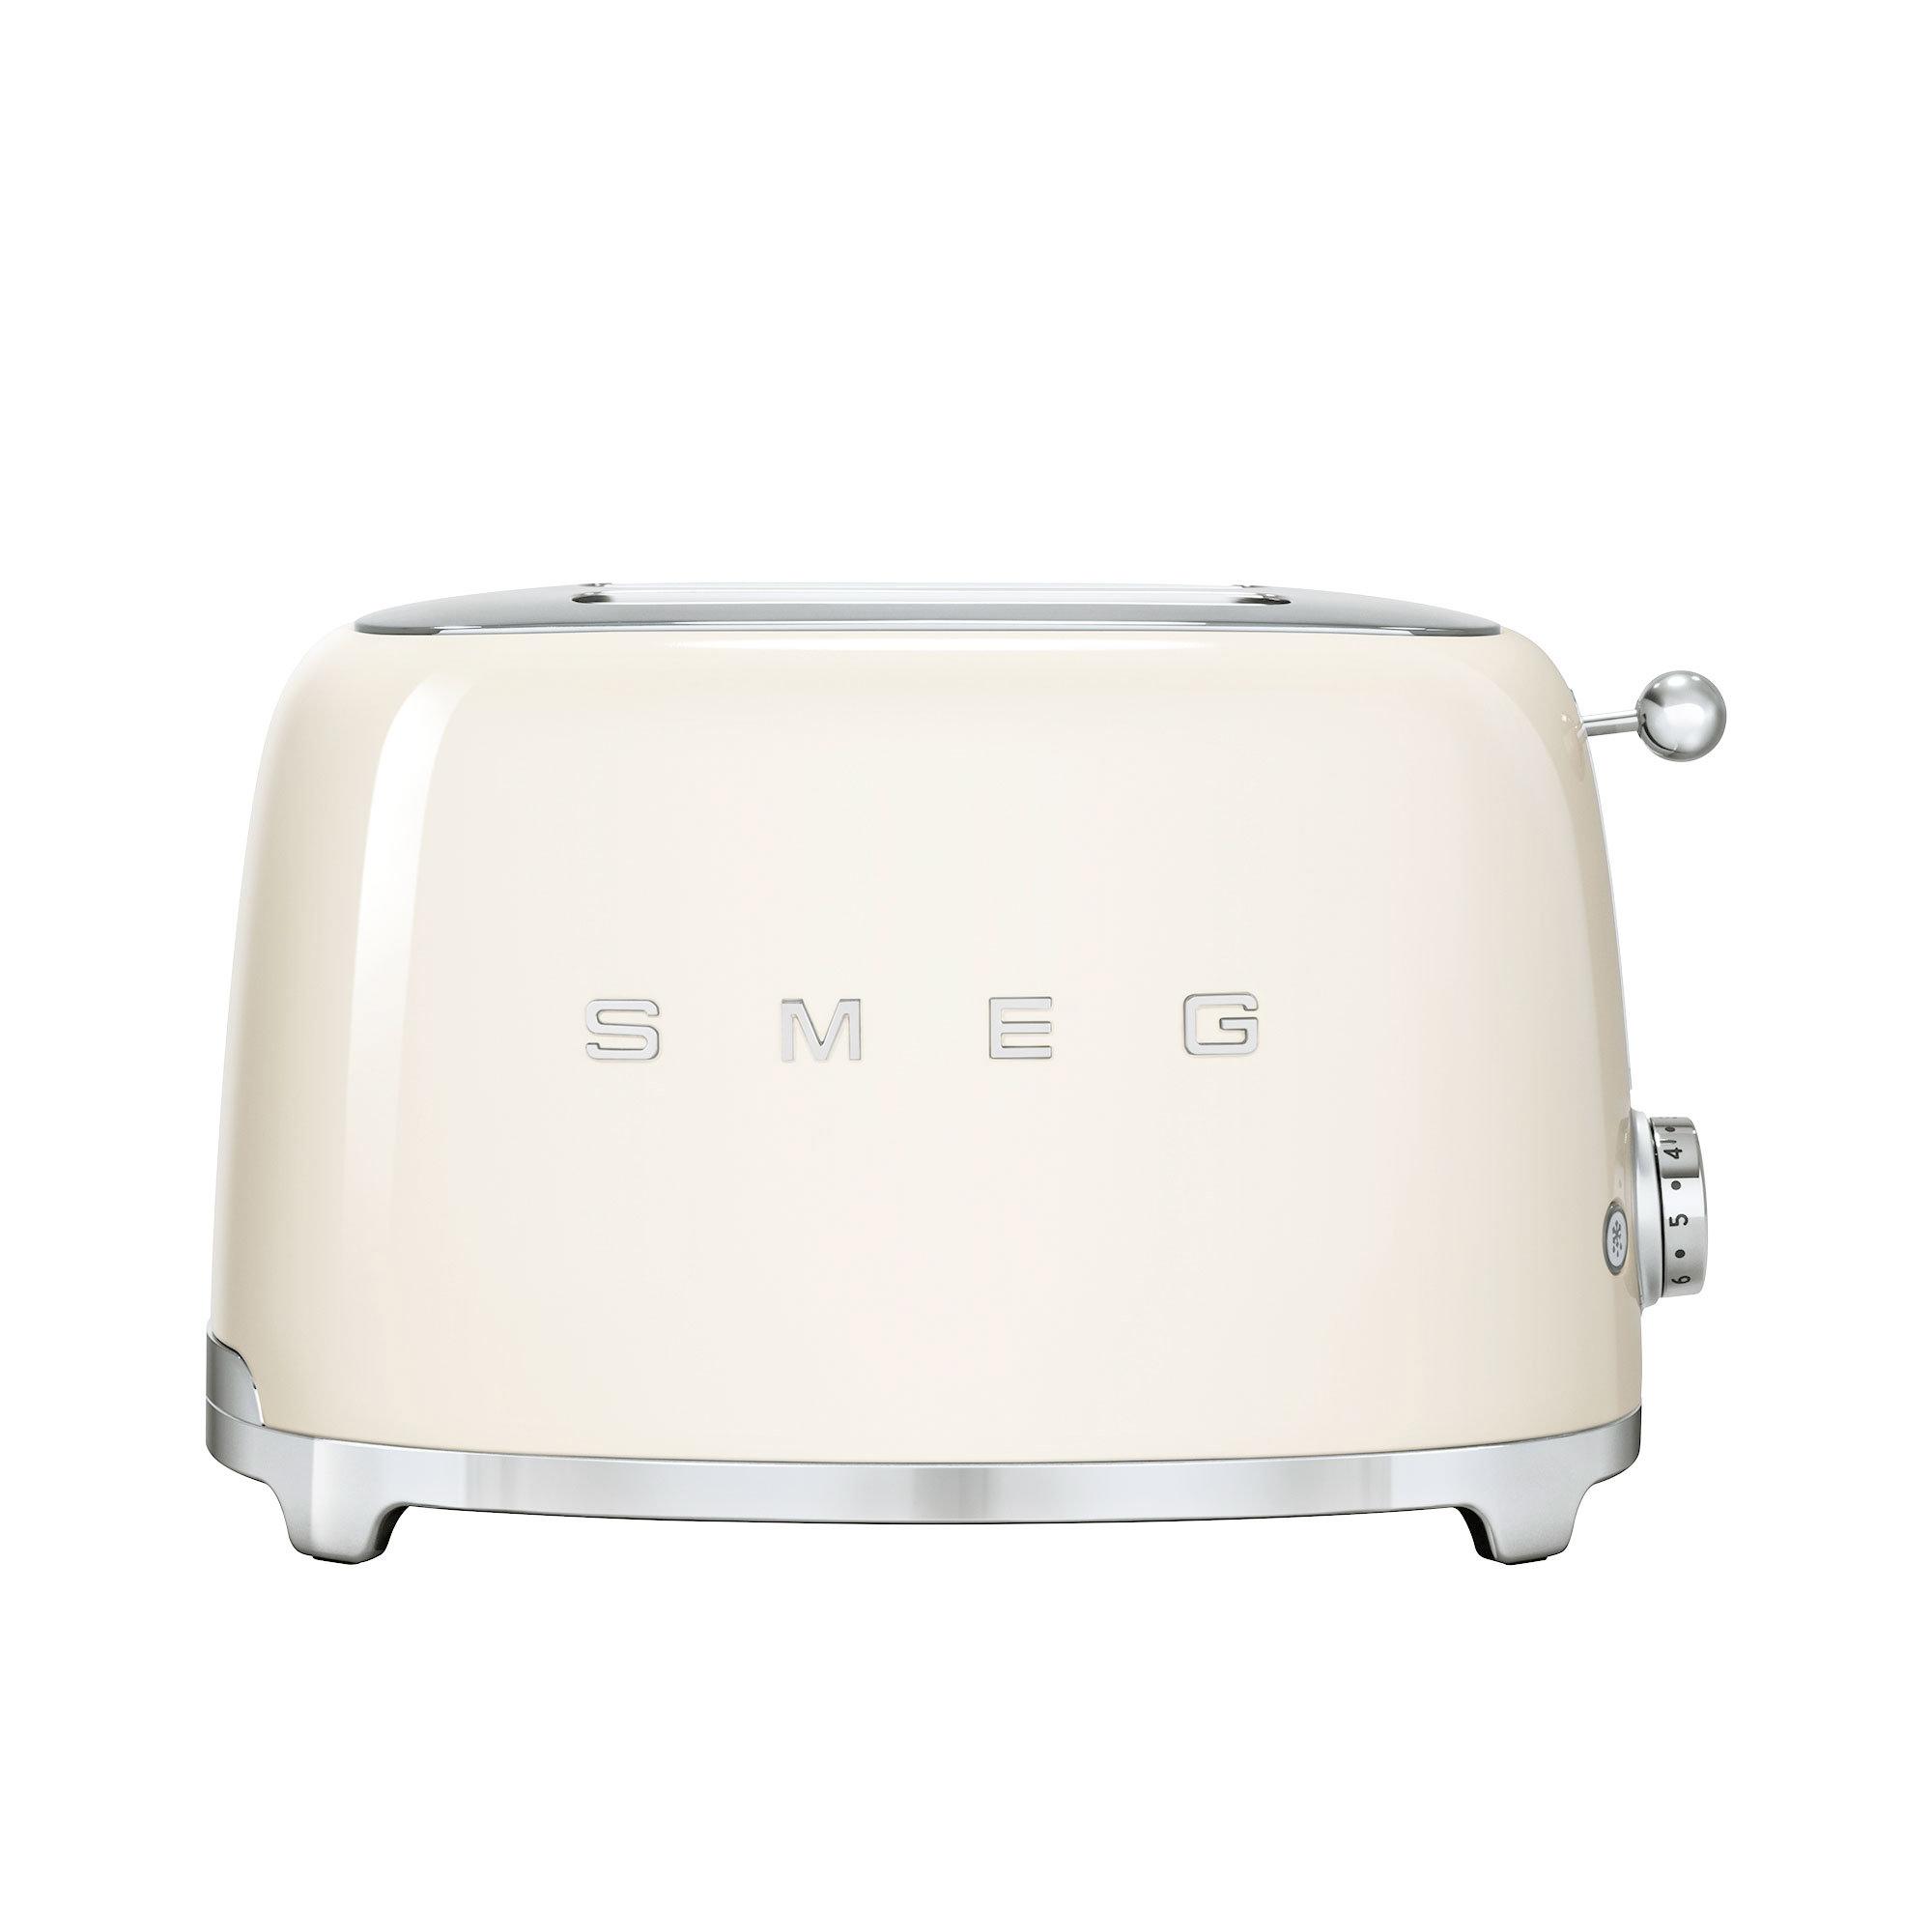 Smeg 50's Retro Style 2 Slice Toaster Cream Image 3